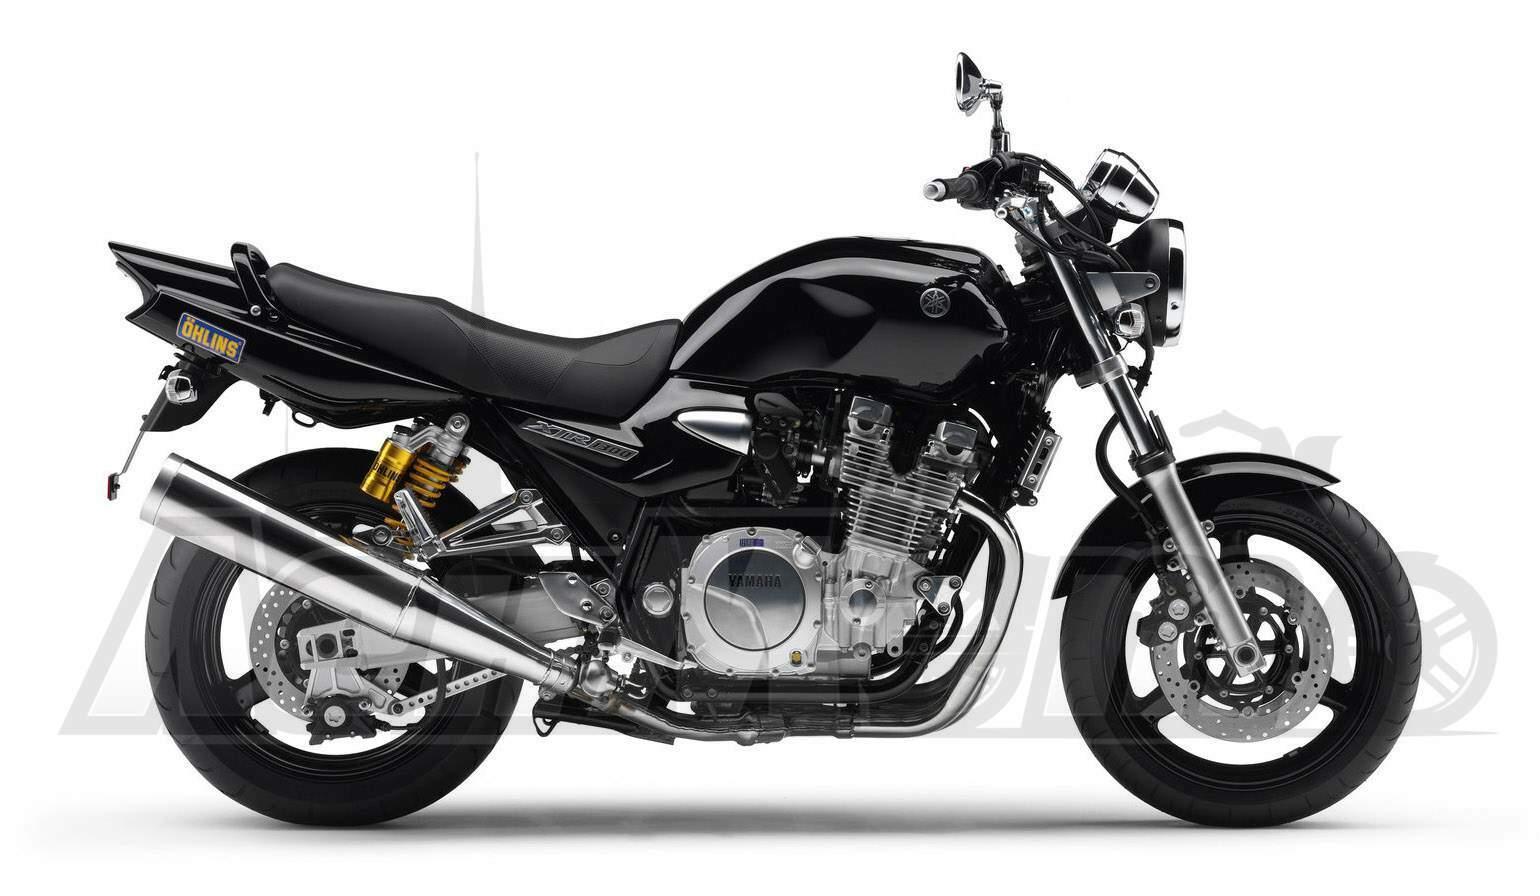 Руководство по ремонту (Service manual) для Мотоцикла (Motorcycle) Yamaha XJR 1300 1999-2003 скачать pdf